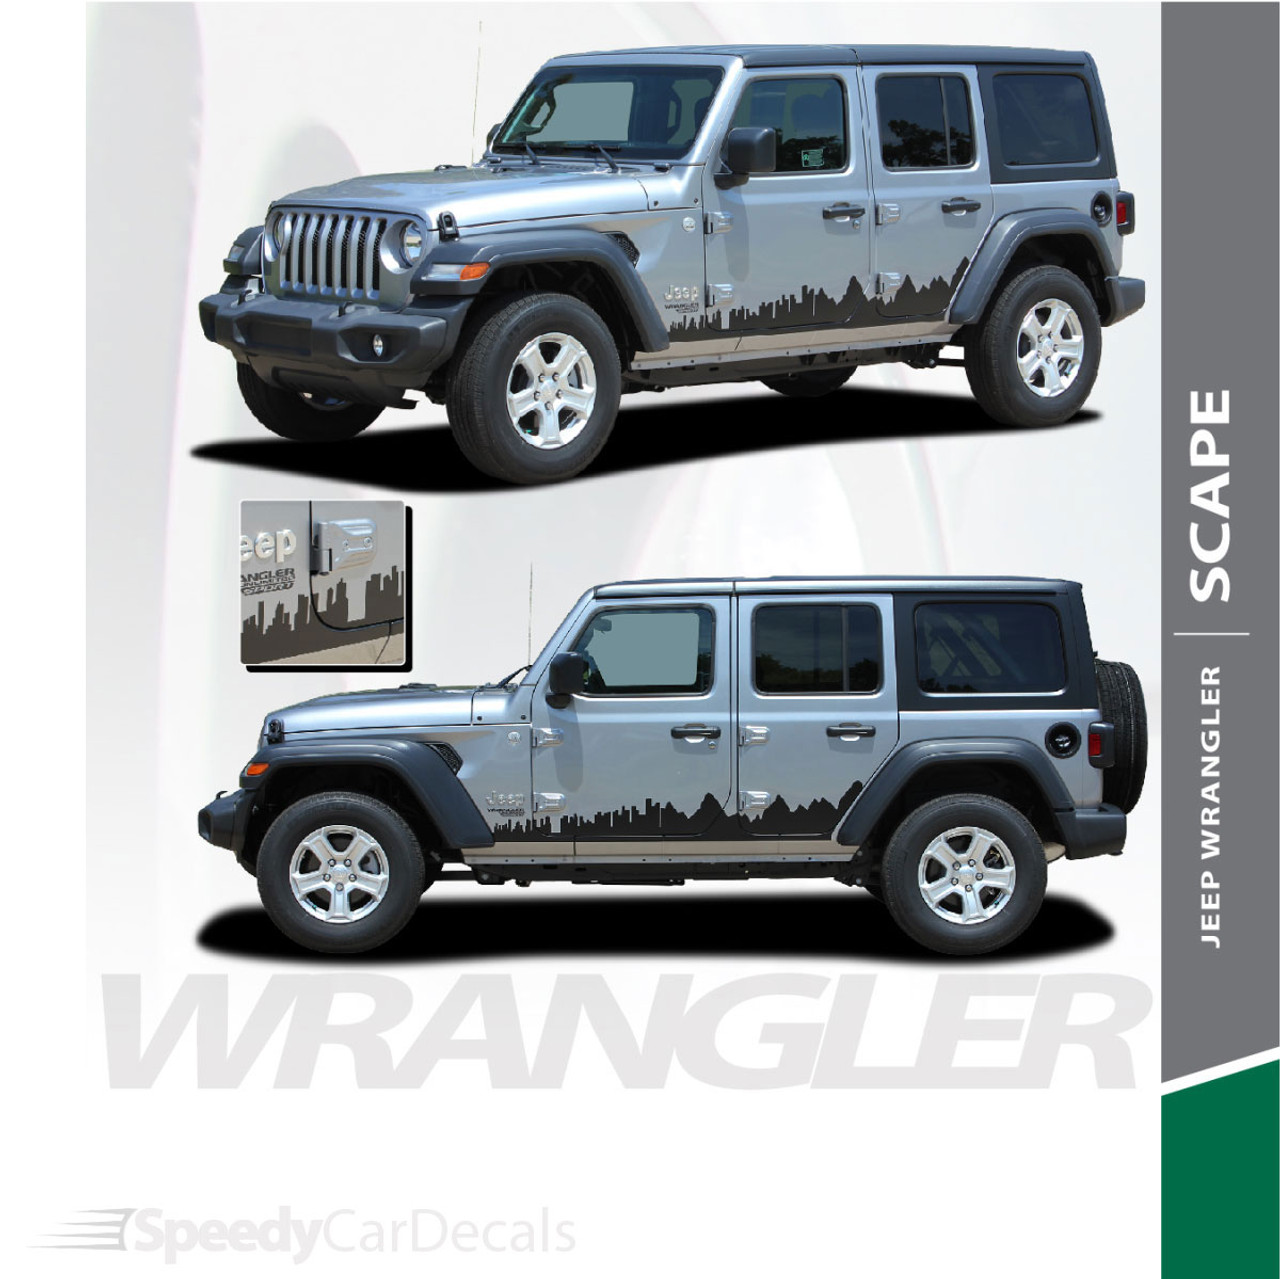 2018-2020 Jeep Wrangler Side Decals SCAPE Stripe Kit 3M Premium Auto  Striping - SpeedyCarDecals - Fast Car Decals, Auto Decals, Auto Stripes,  Vehicle Specific Graphics